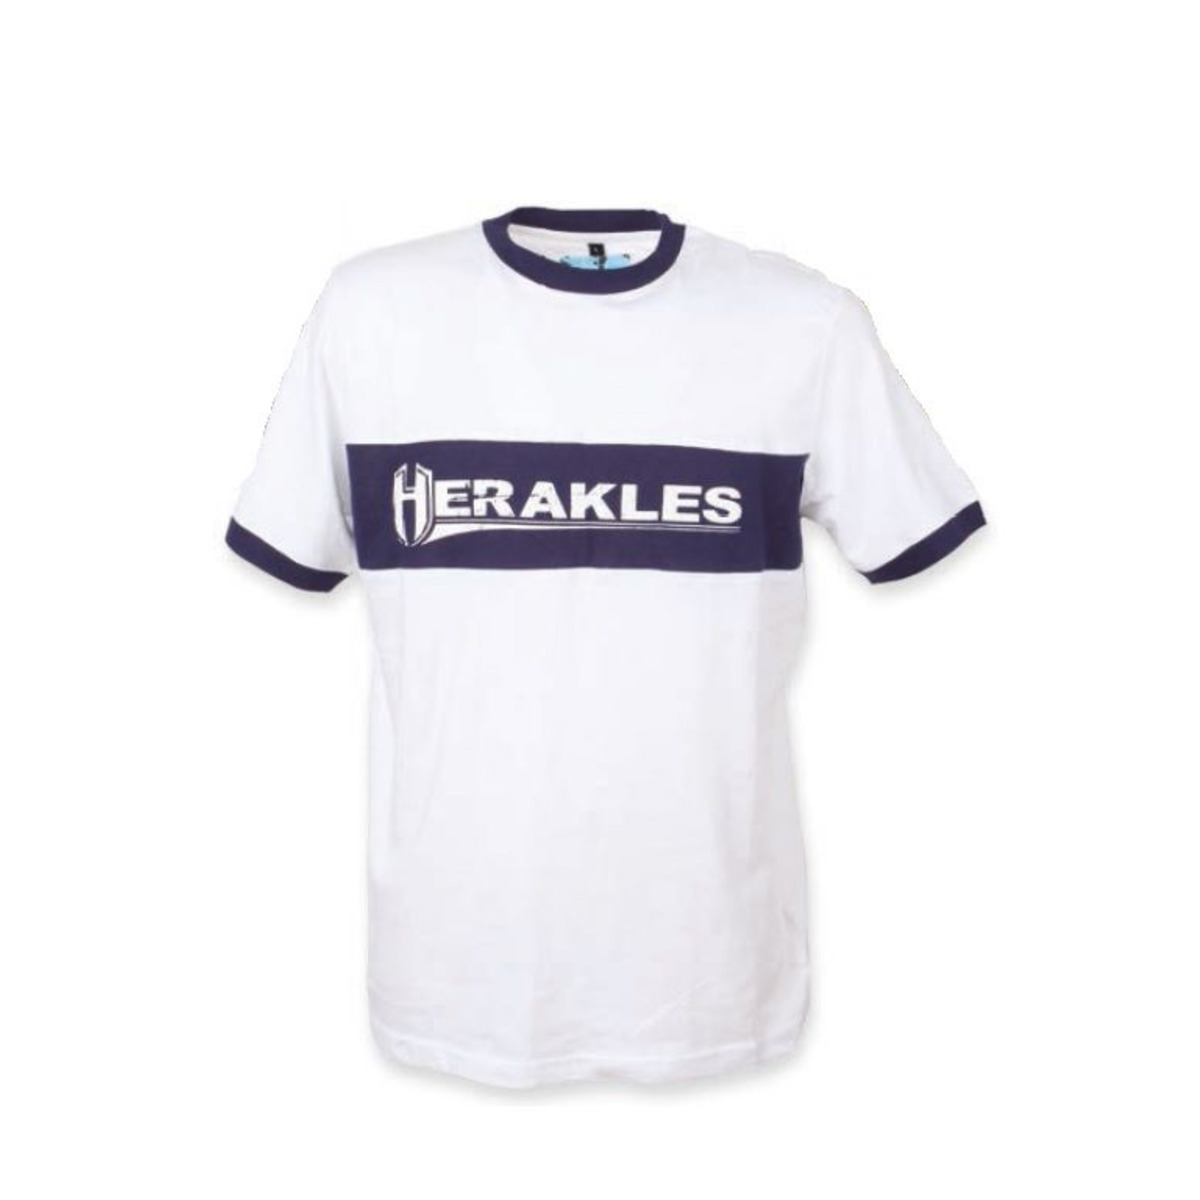 Herakles Camiseta Blanca - Azul - L